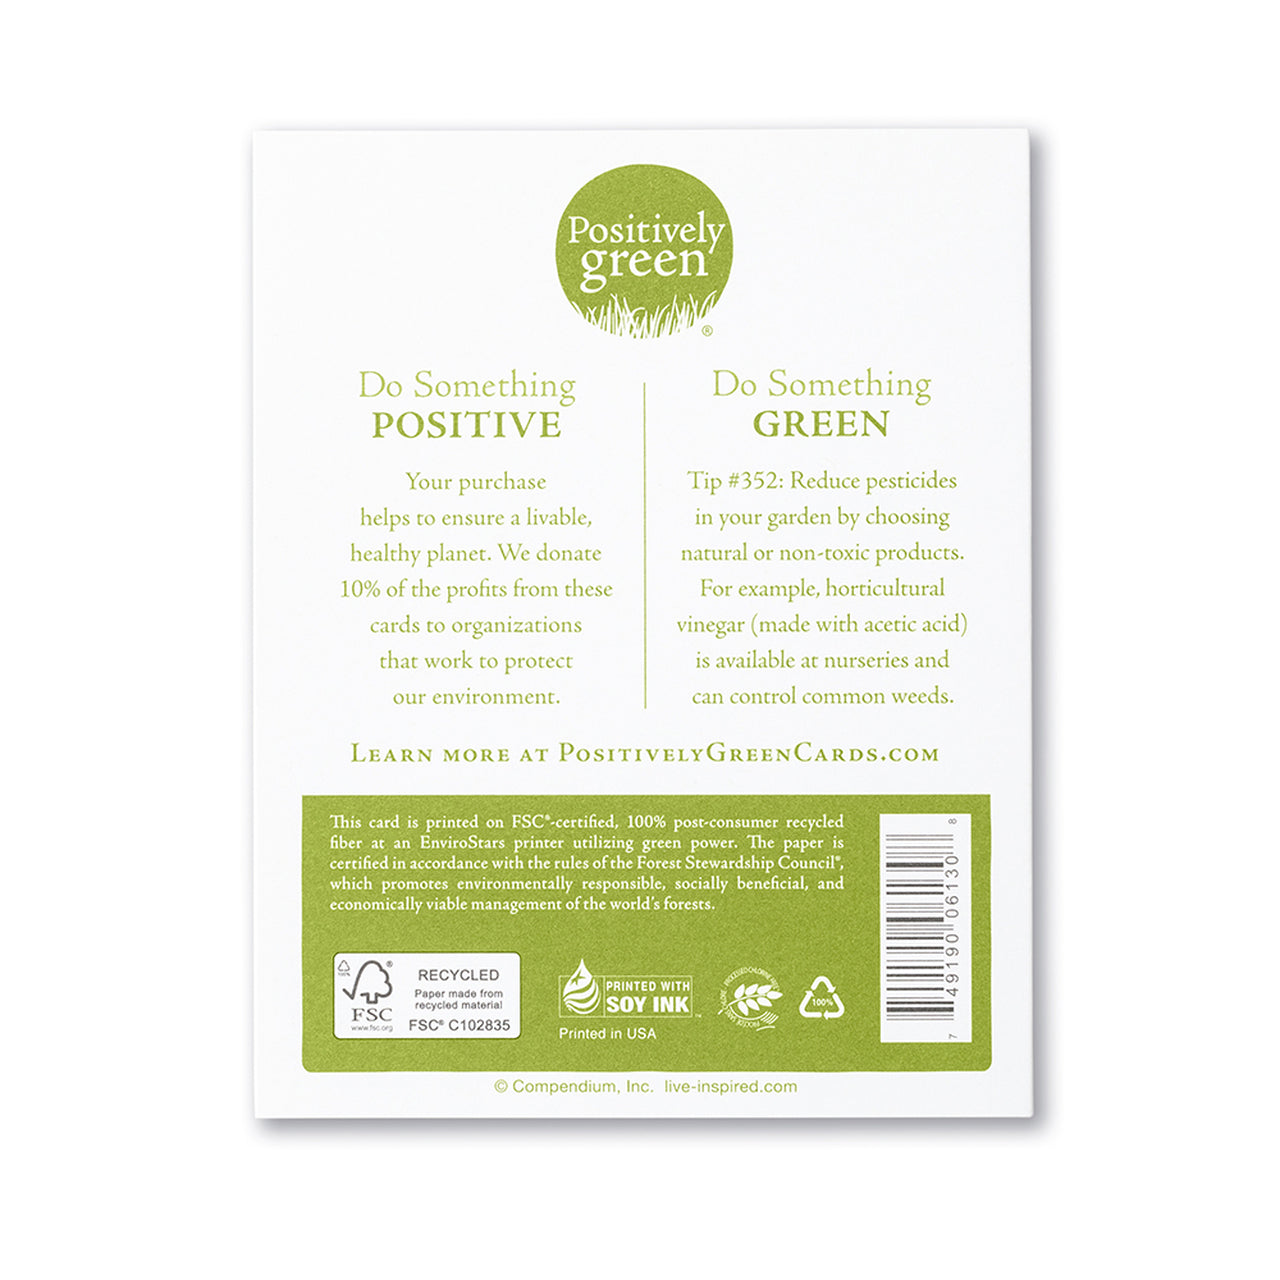 Positively Green Greeting Card - Birthday - "I Wish You Joy Of Your Birthday Twenty Times Over" - Jane Austen - Mellow Monkey